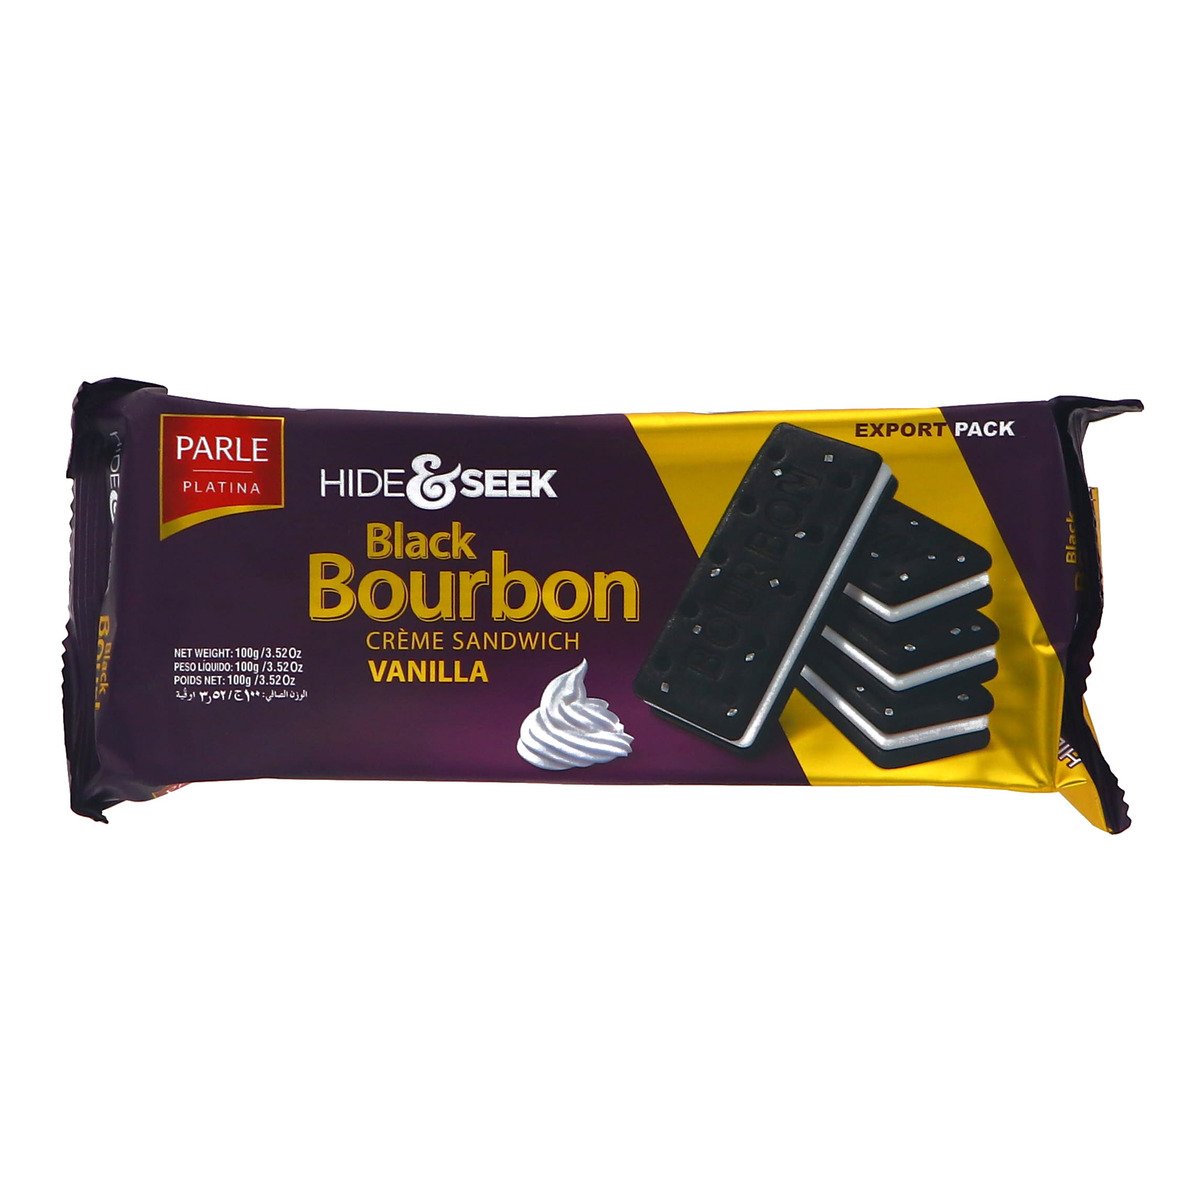 Parle Hide & Seek Black Bourbon Creme Sandwich Vanilla 100g